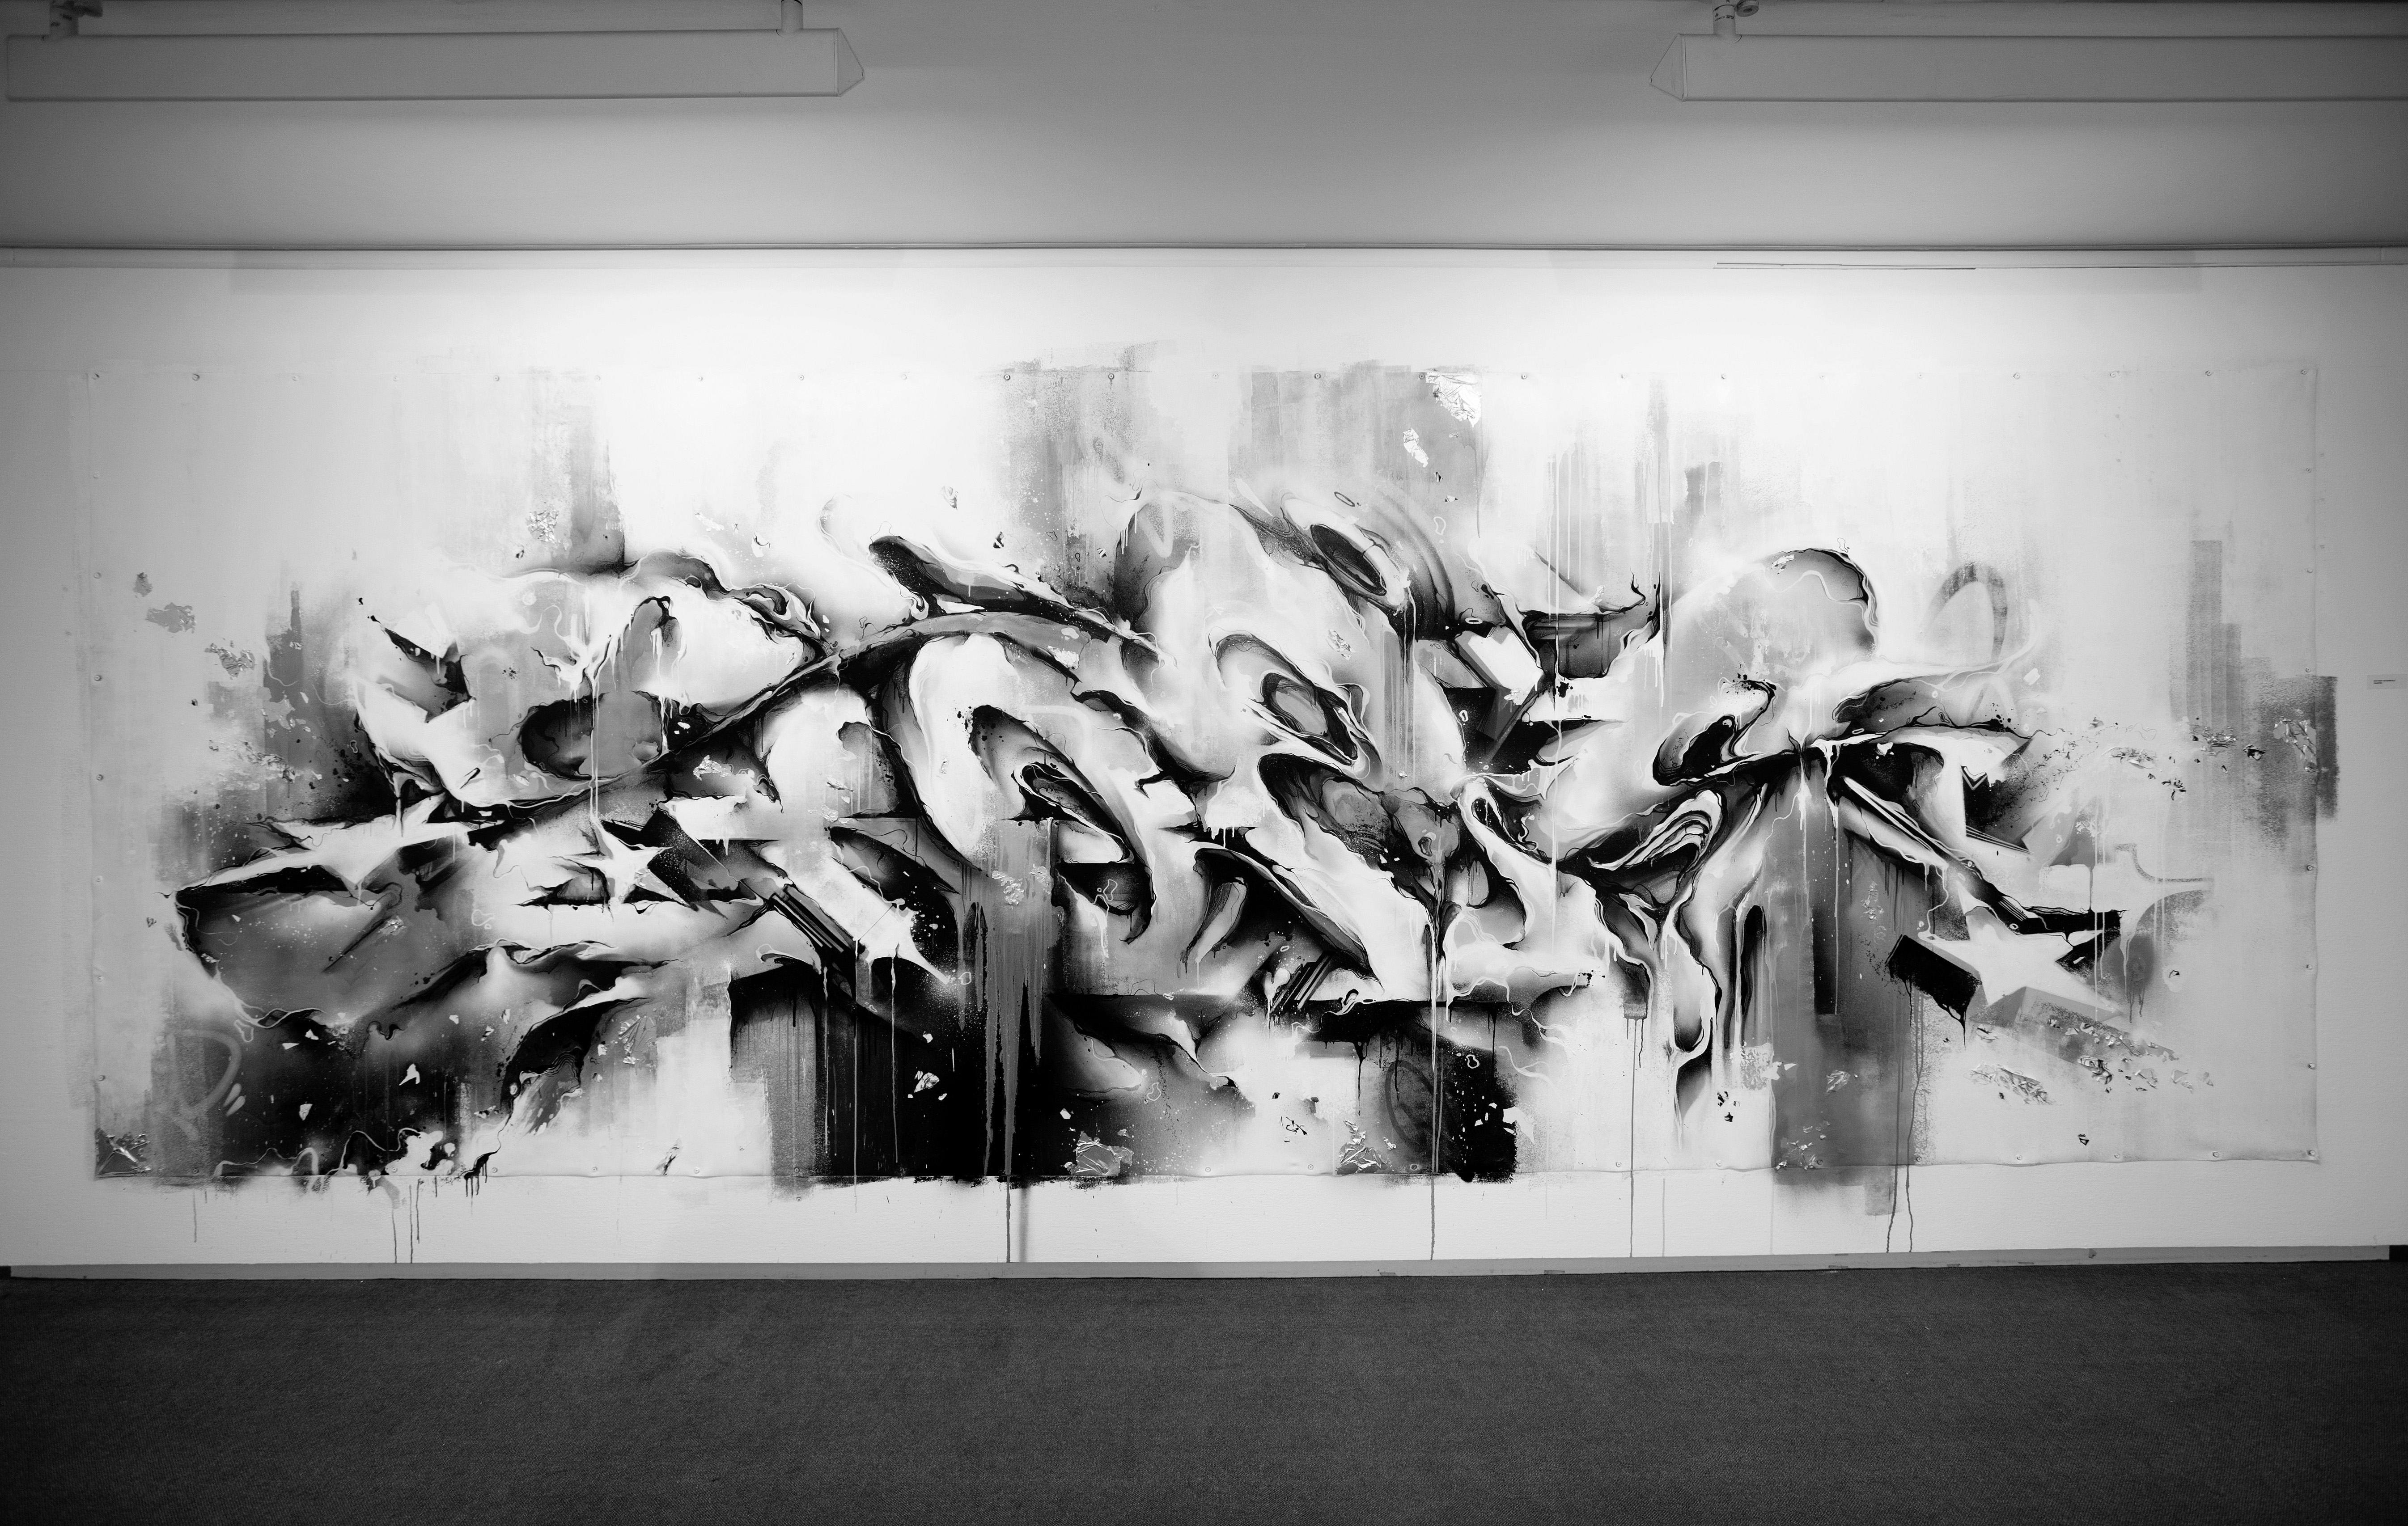 A work by Does - Hypergraffiti heerlen transition canvas